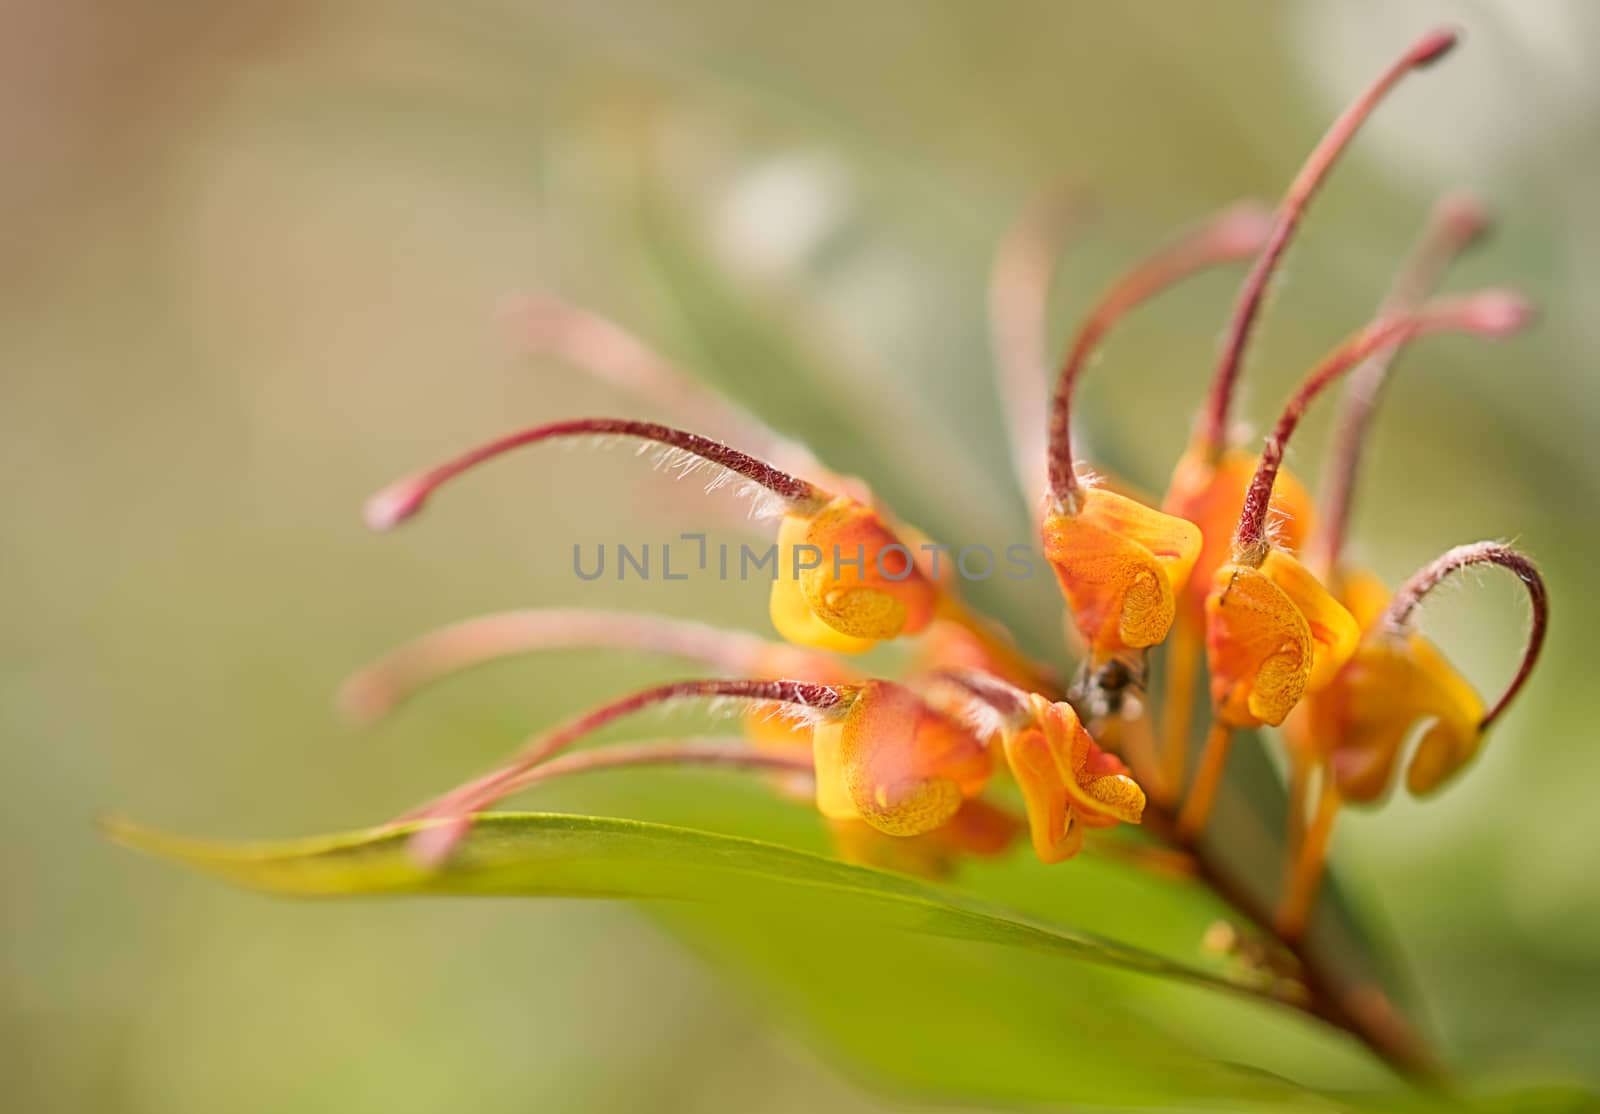  Close-up of awesome orange flower Australian native wildflower Grevillea venusta also known as spider flower